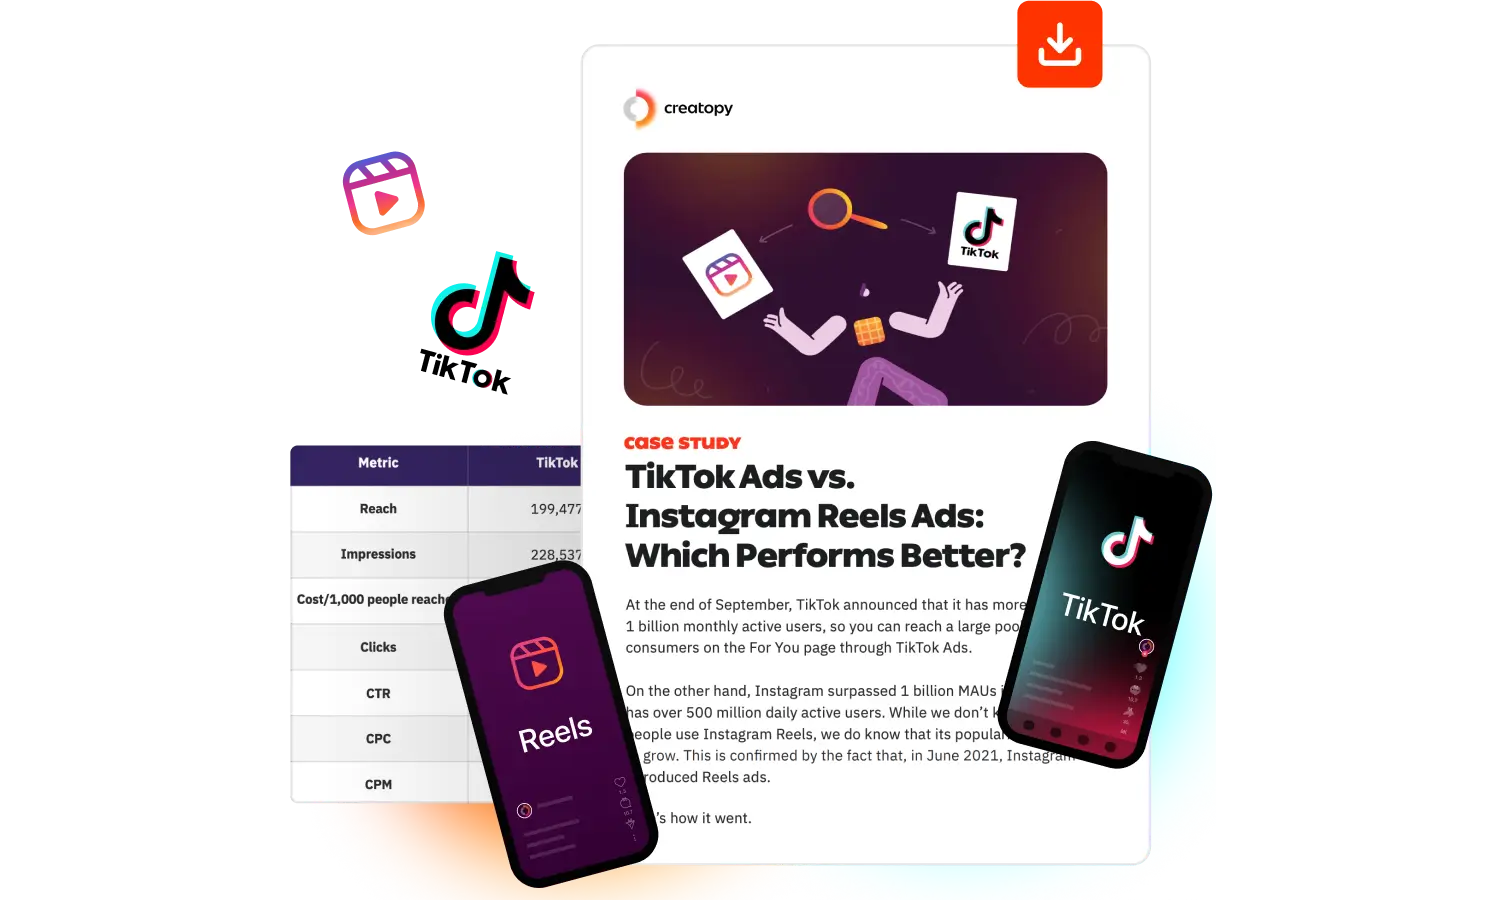 TikTok ads vs. Instagram Reels ads case study